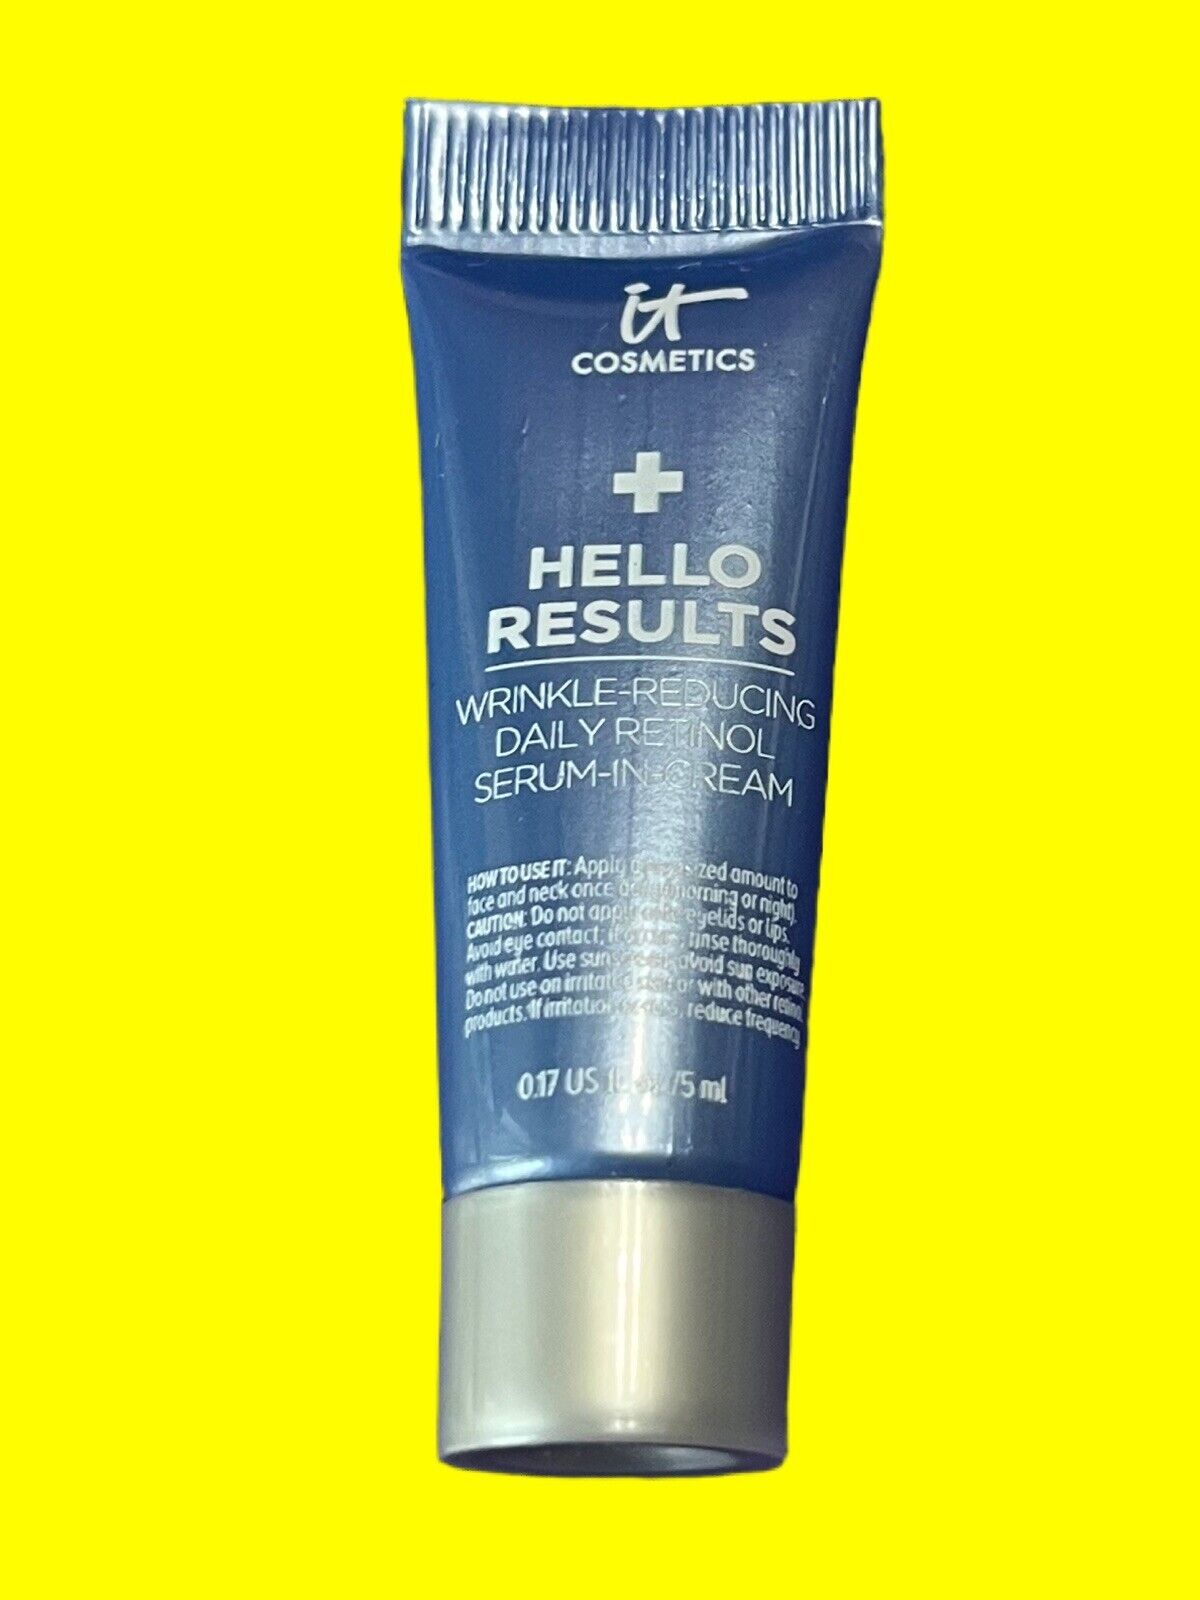 IT Cosmetics Hello Results Wrinkle-Reducing Daily Retinol Serum Cream 0.17oz 5mL - $14.84